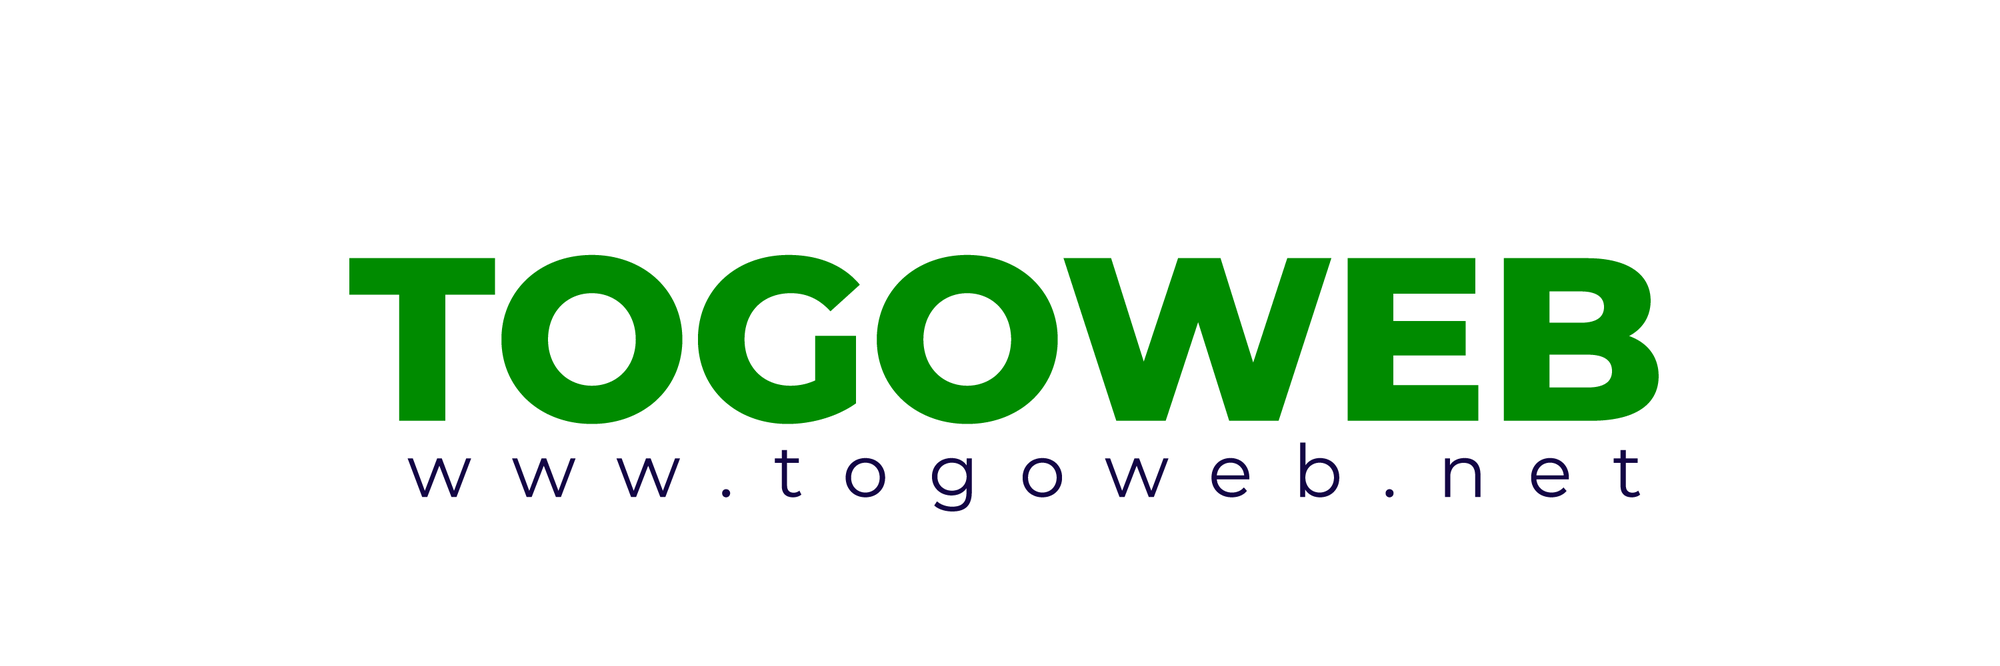 Togoweb Logo